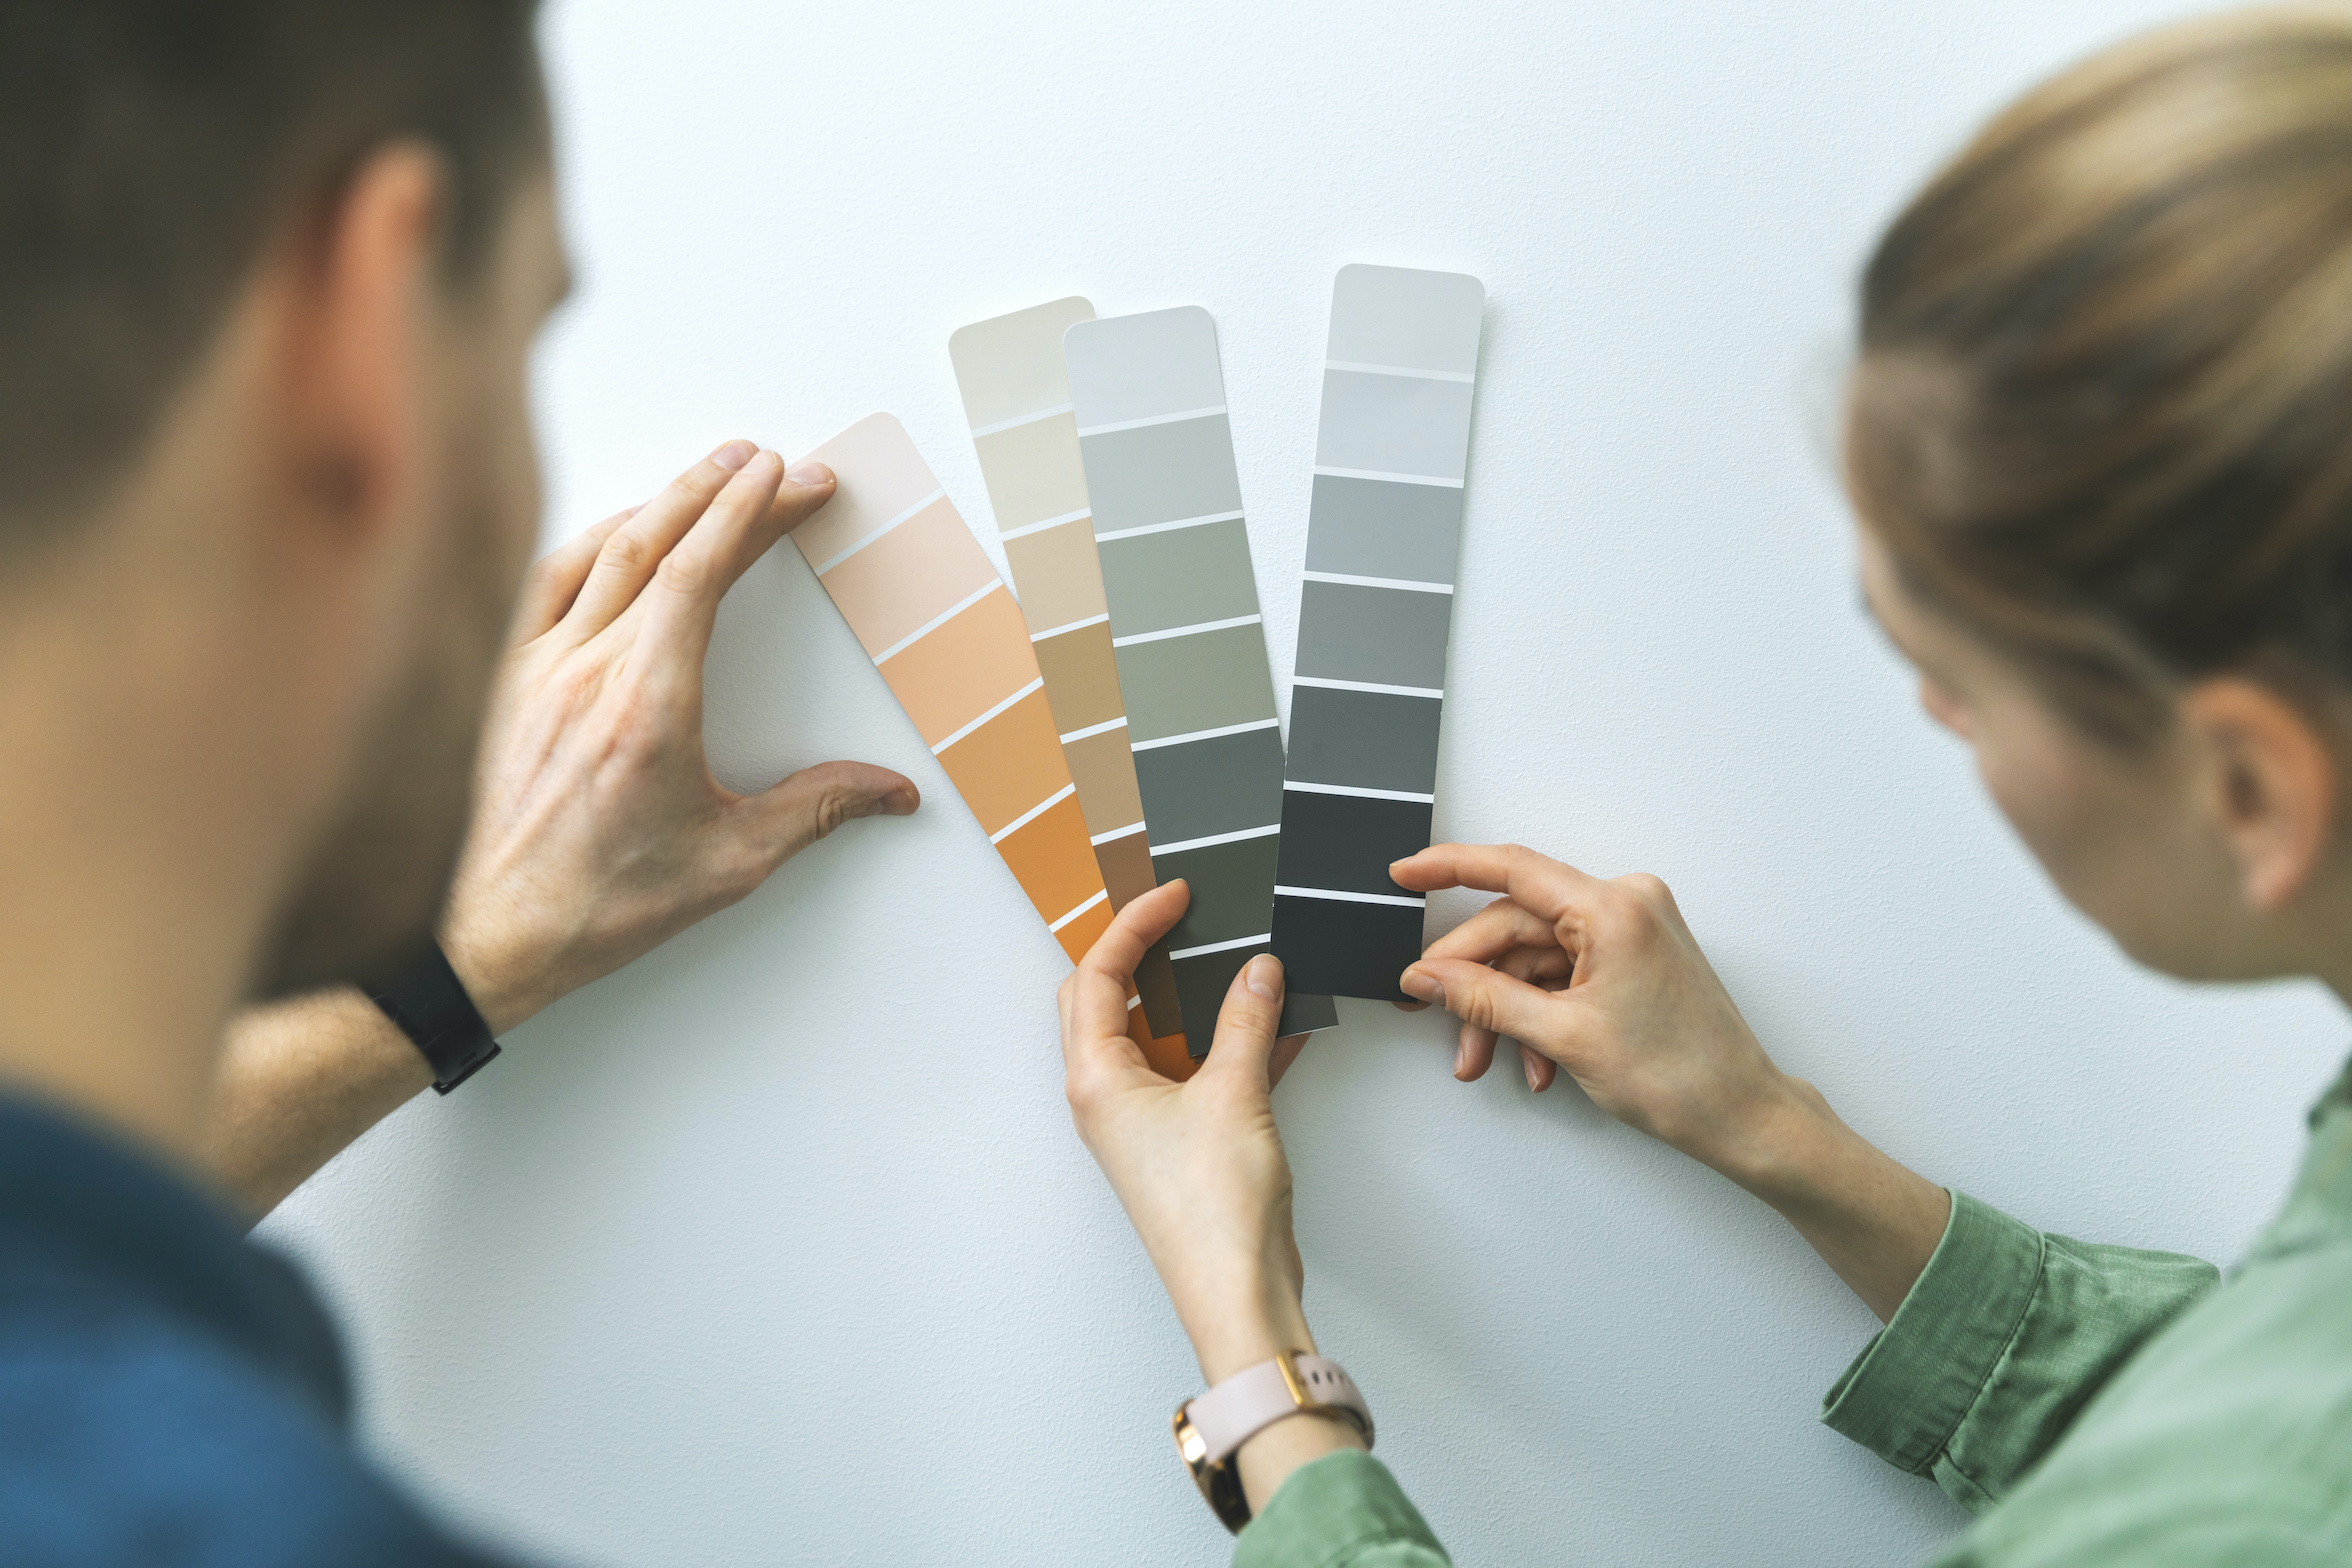 choosing paint colors for interior design